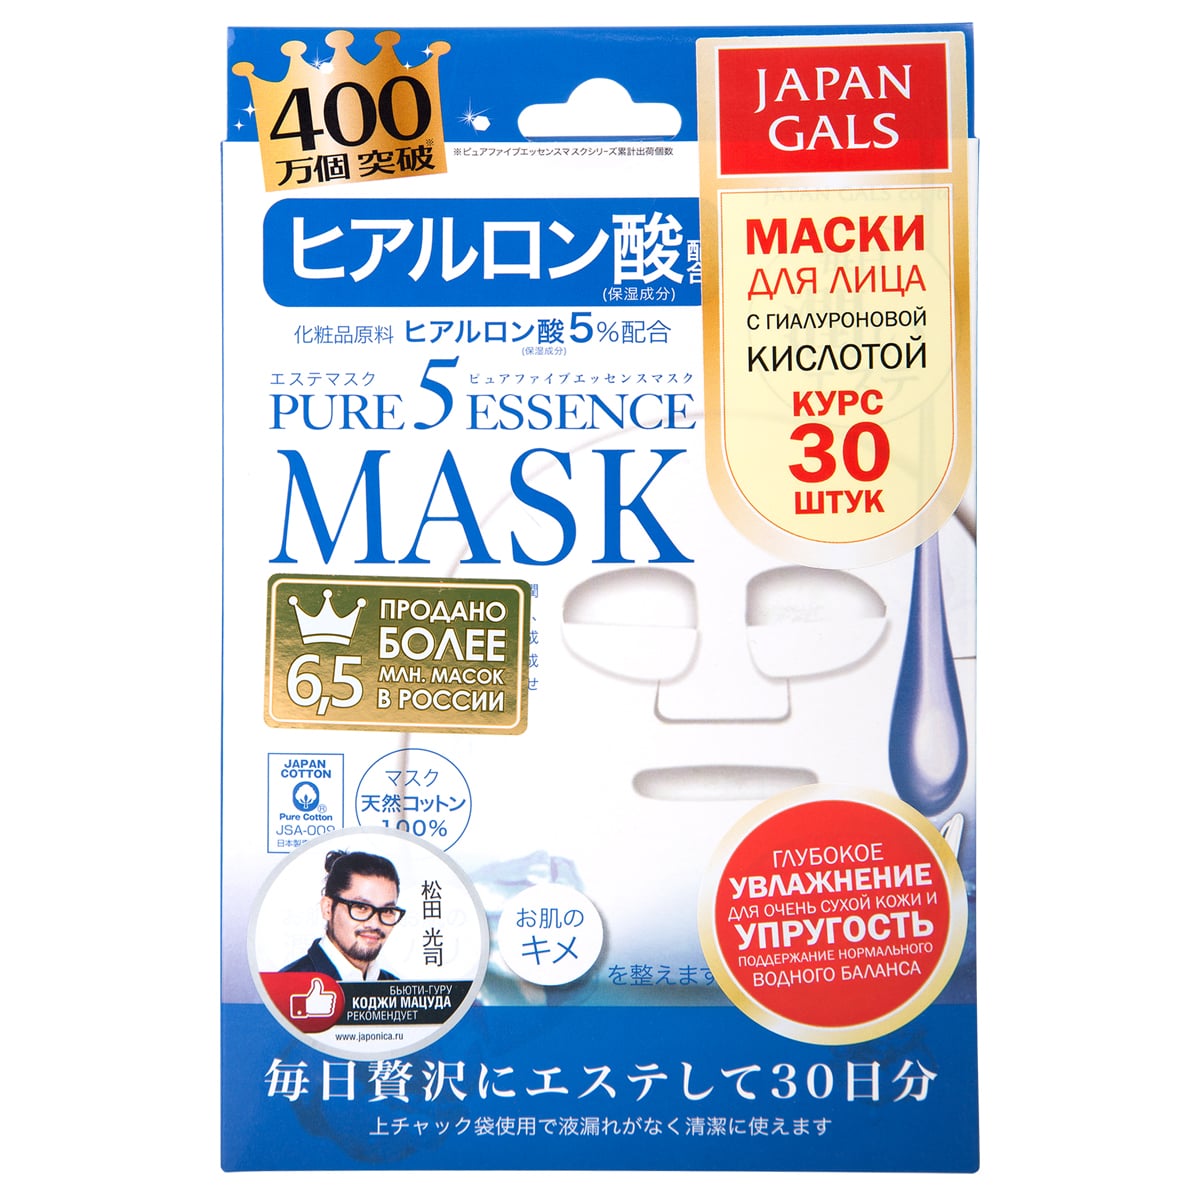 Japan Gals Маска с гиалуроновой кислотой Essential, 30 шт (Japan Gals, Pure5)